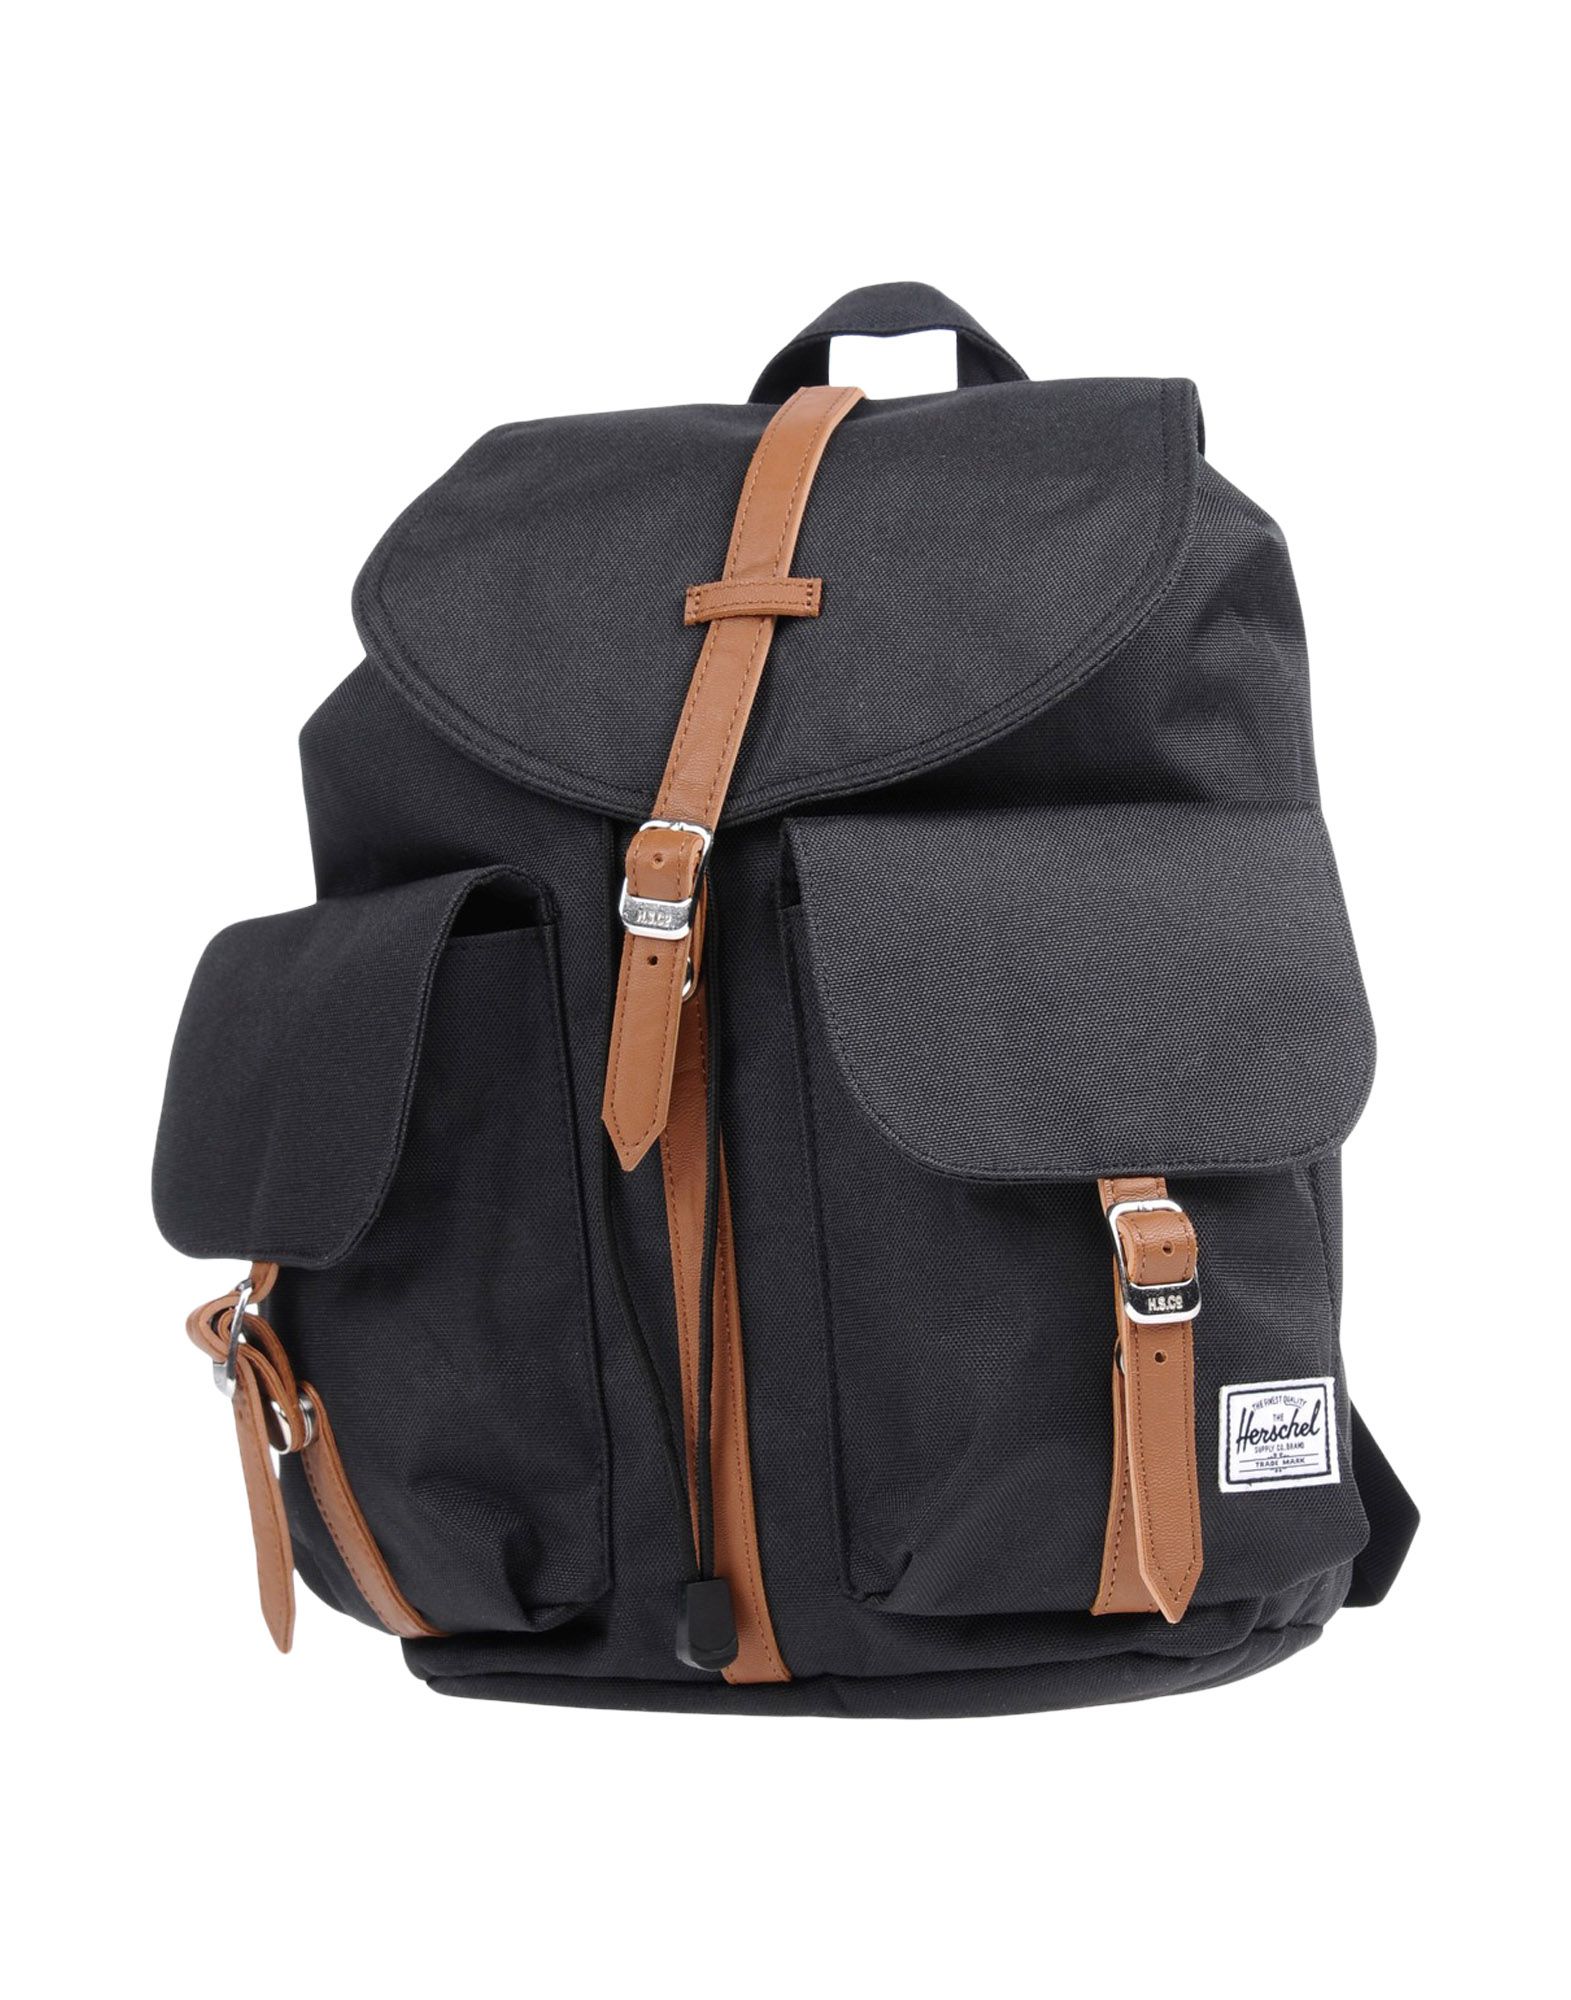 HERSCHEL SUPPLY CO Backpack & fanny pack,45403246TX 1